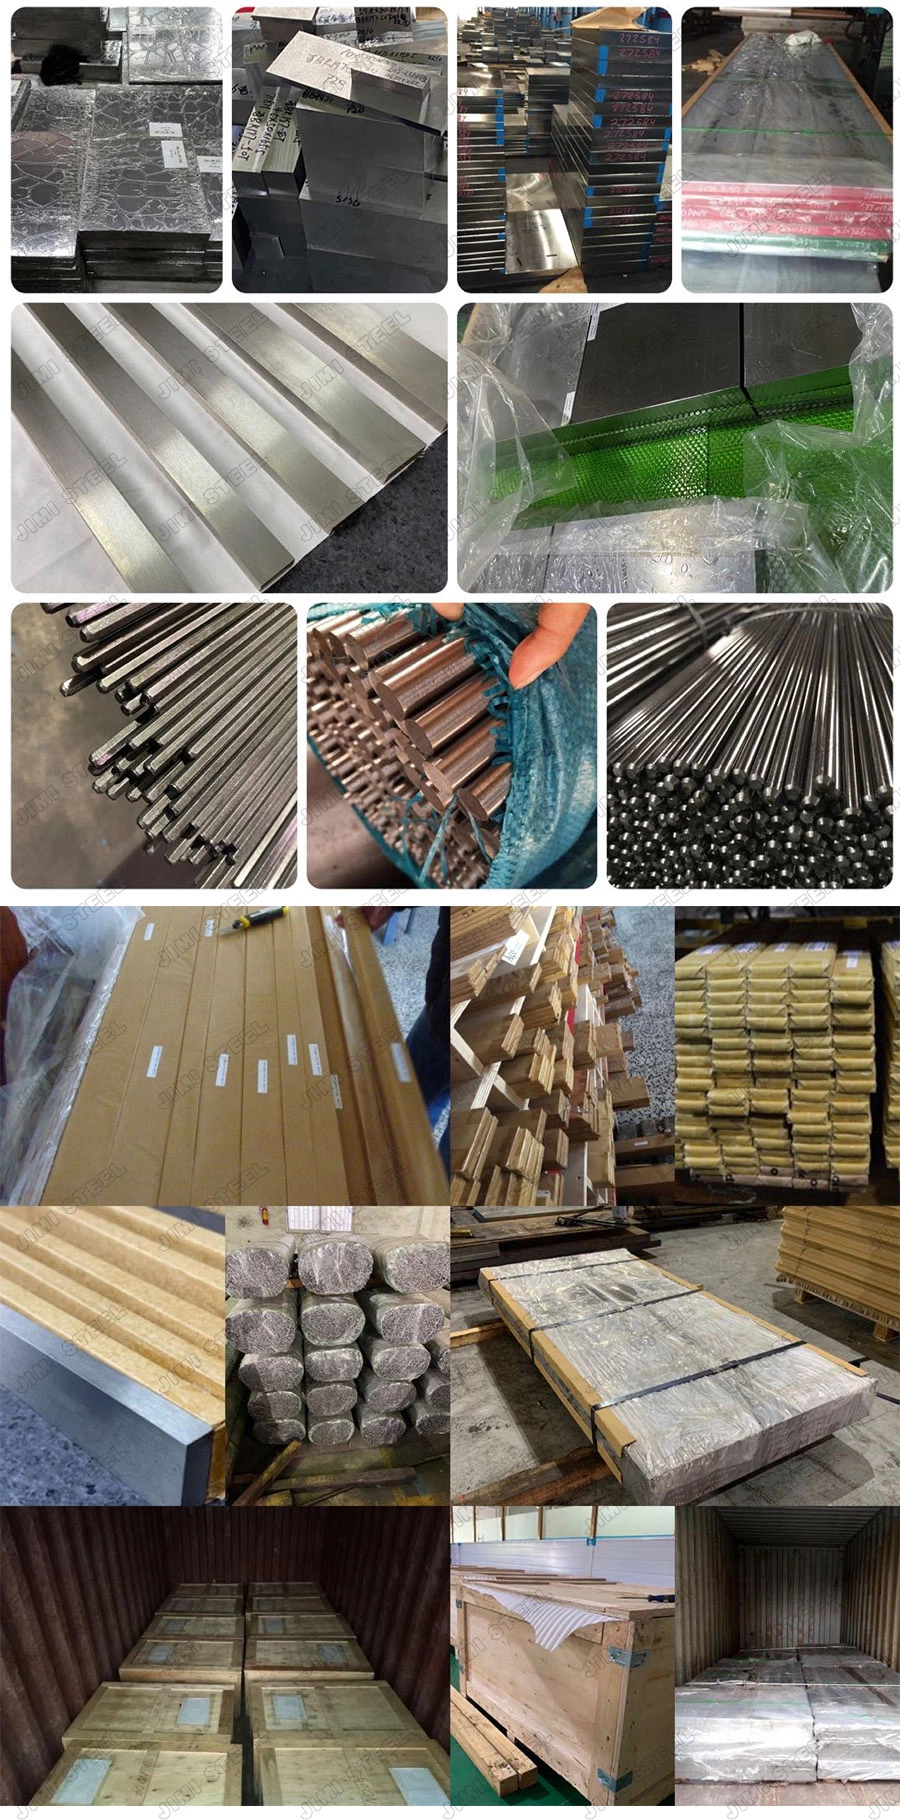 52100, Gcr15, Suj2 Steel Ball/Steel Bar/Roller/Steel/Round Bar/Bearing Steel Pipe/Alloy Steel/Bearing Steel